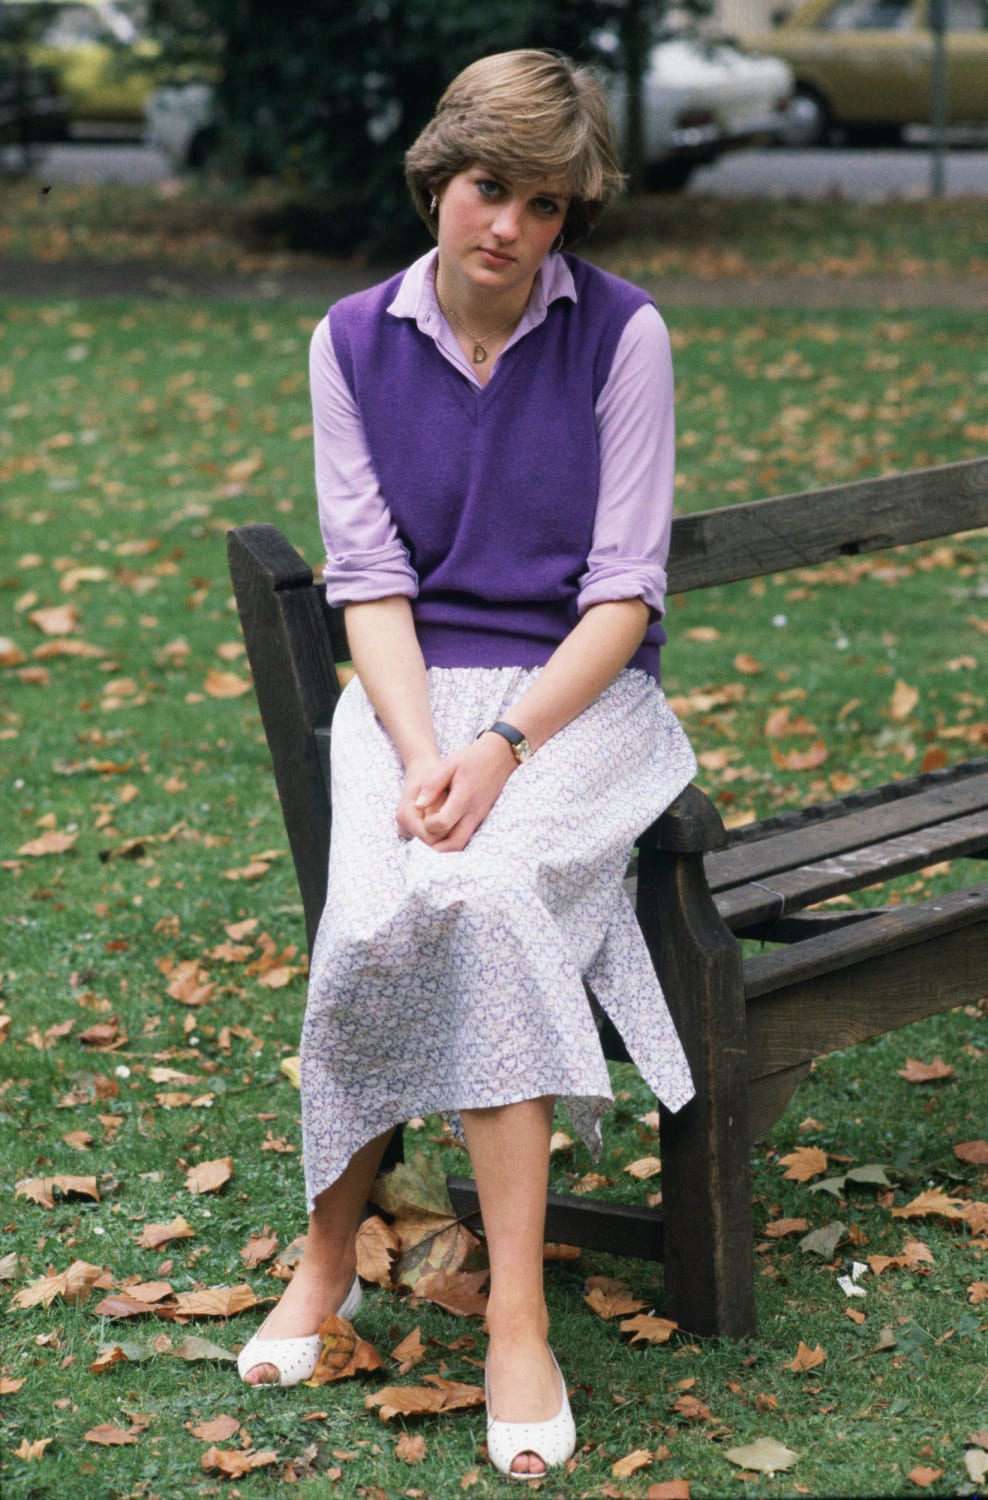 Princess Diana as a 19 year old Kindergarten teacher in 1980.